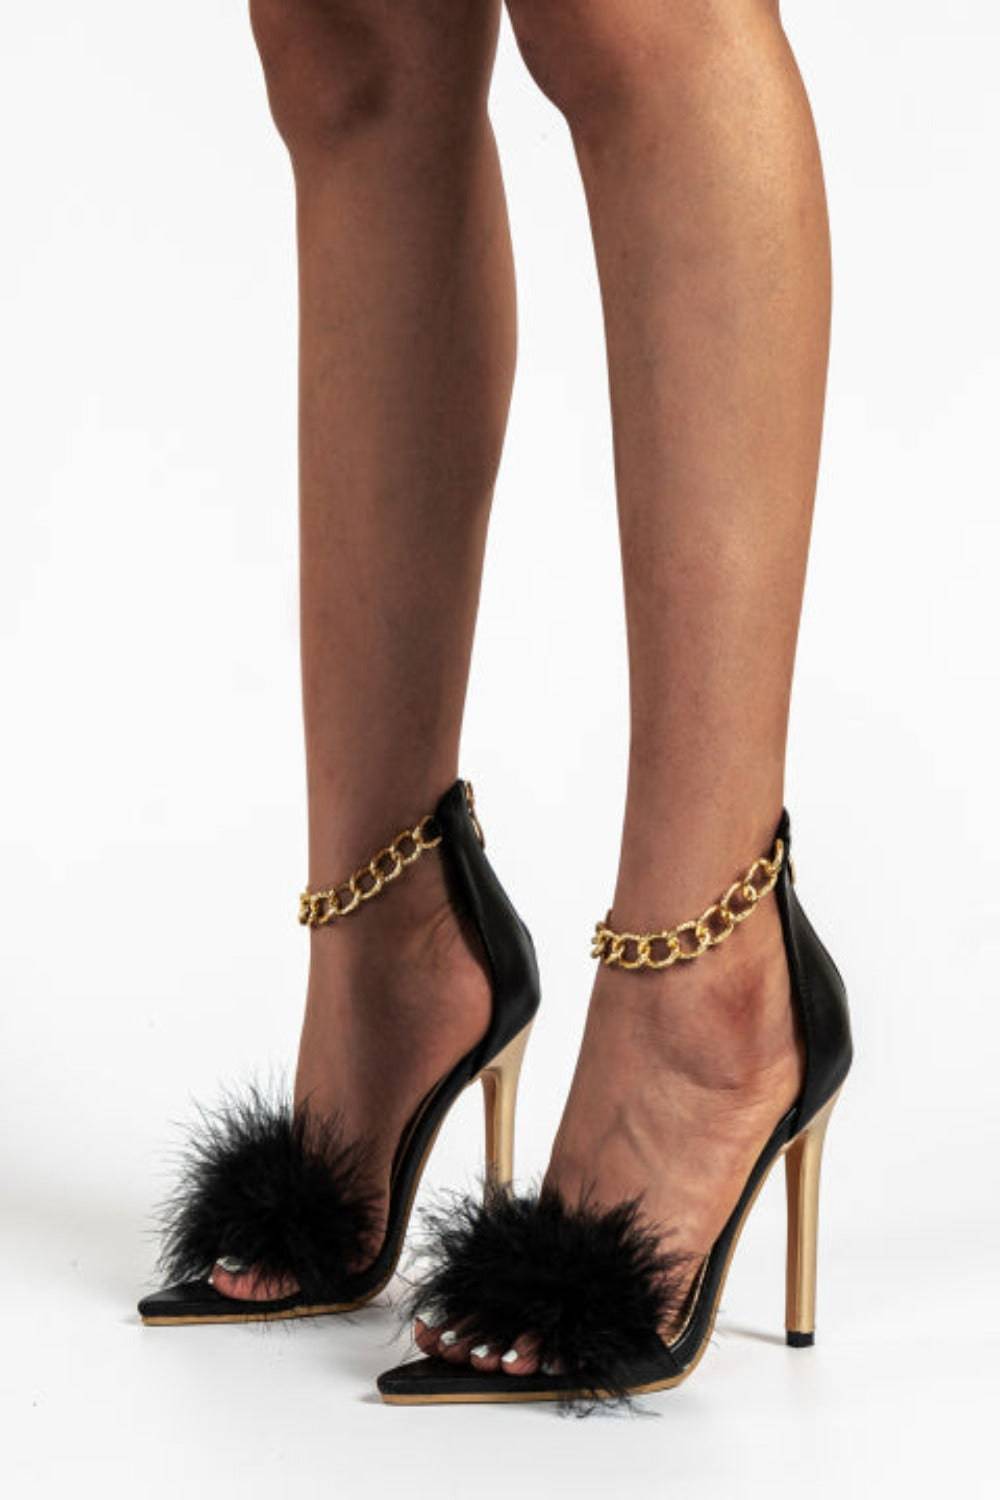 Stiletto High Heel Sandals Gold Chain Fluffy Fur Shoes - TGC Boutique - High Heel Sandals